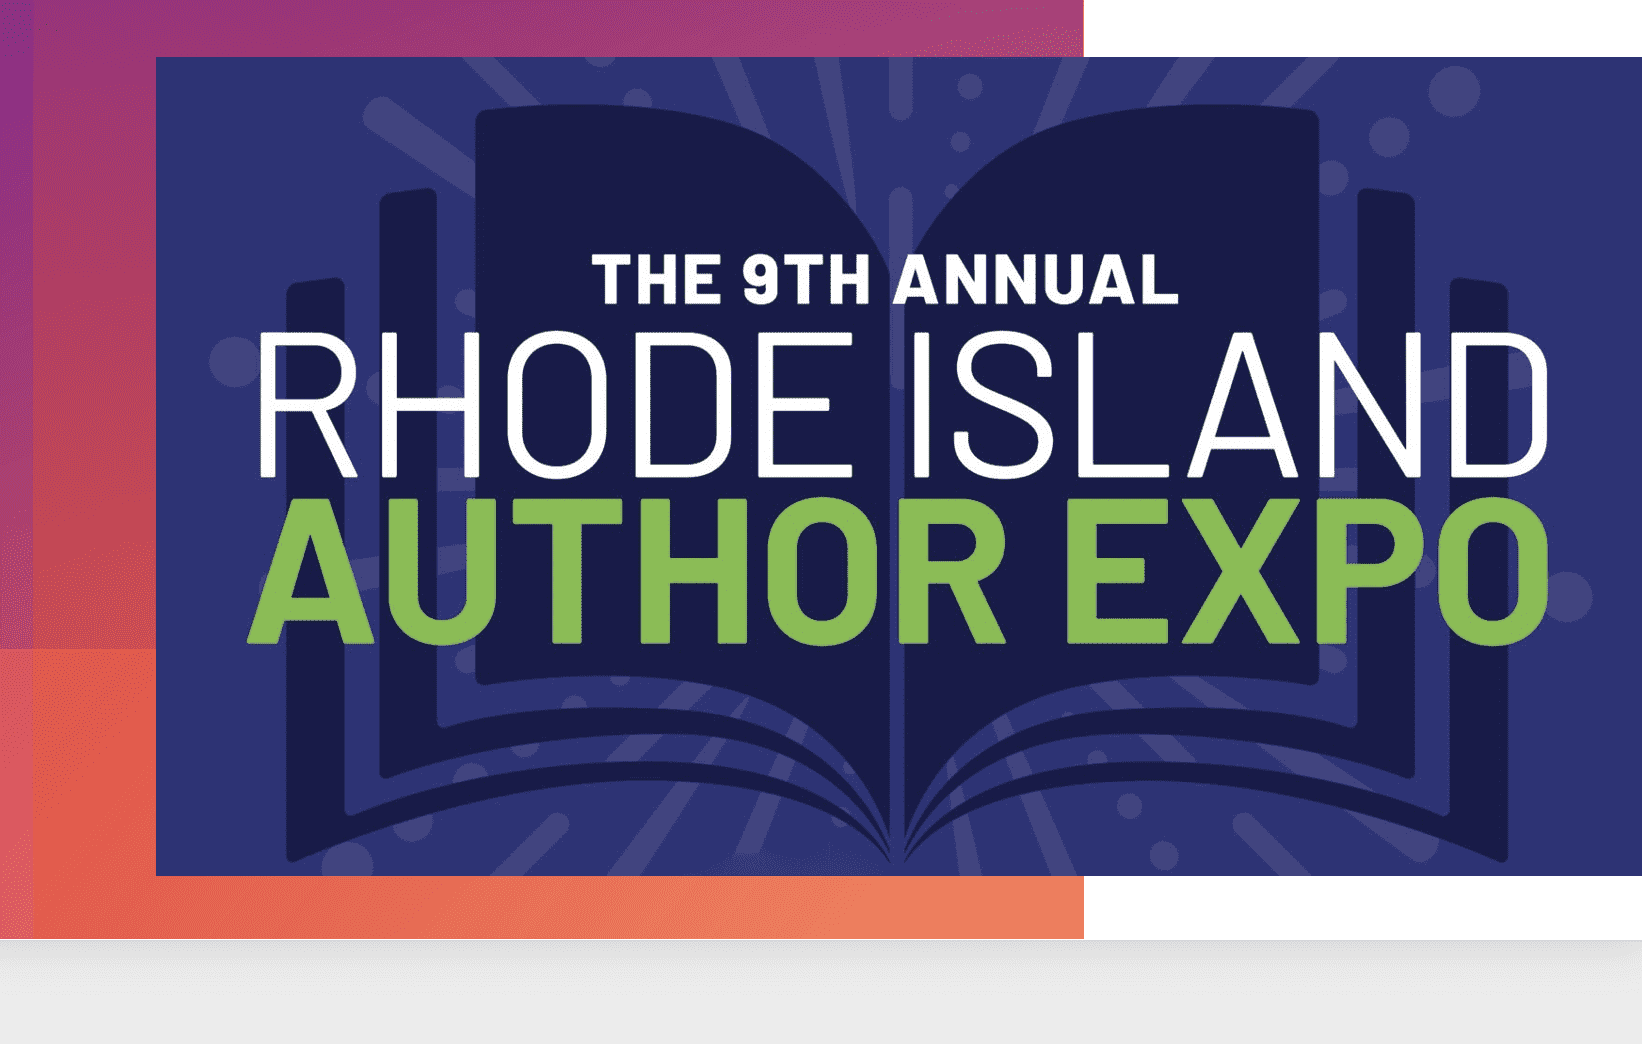 The 8th annual rhode island author expo logo.